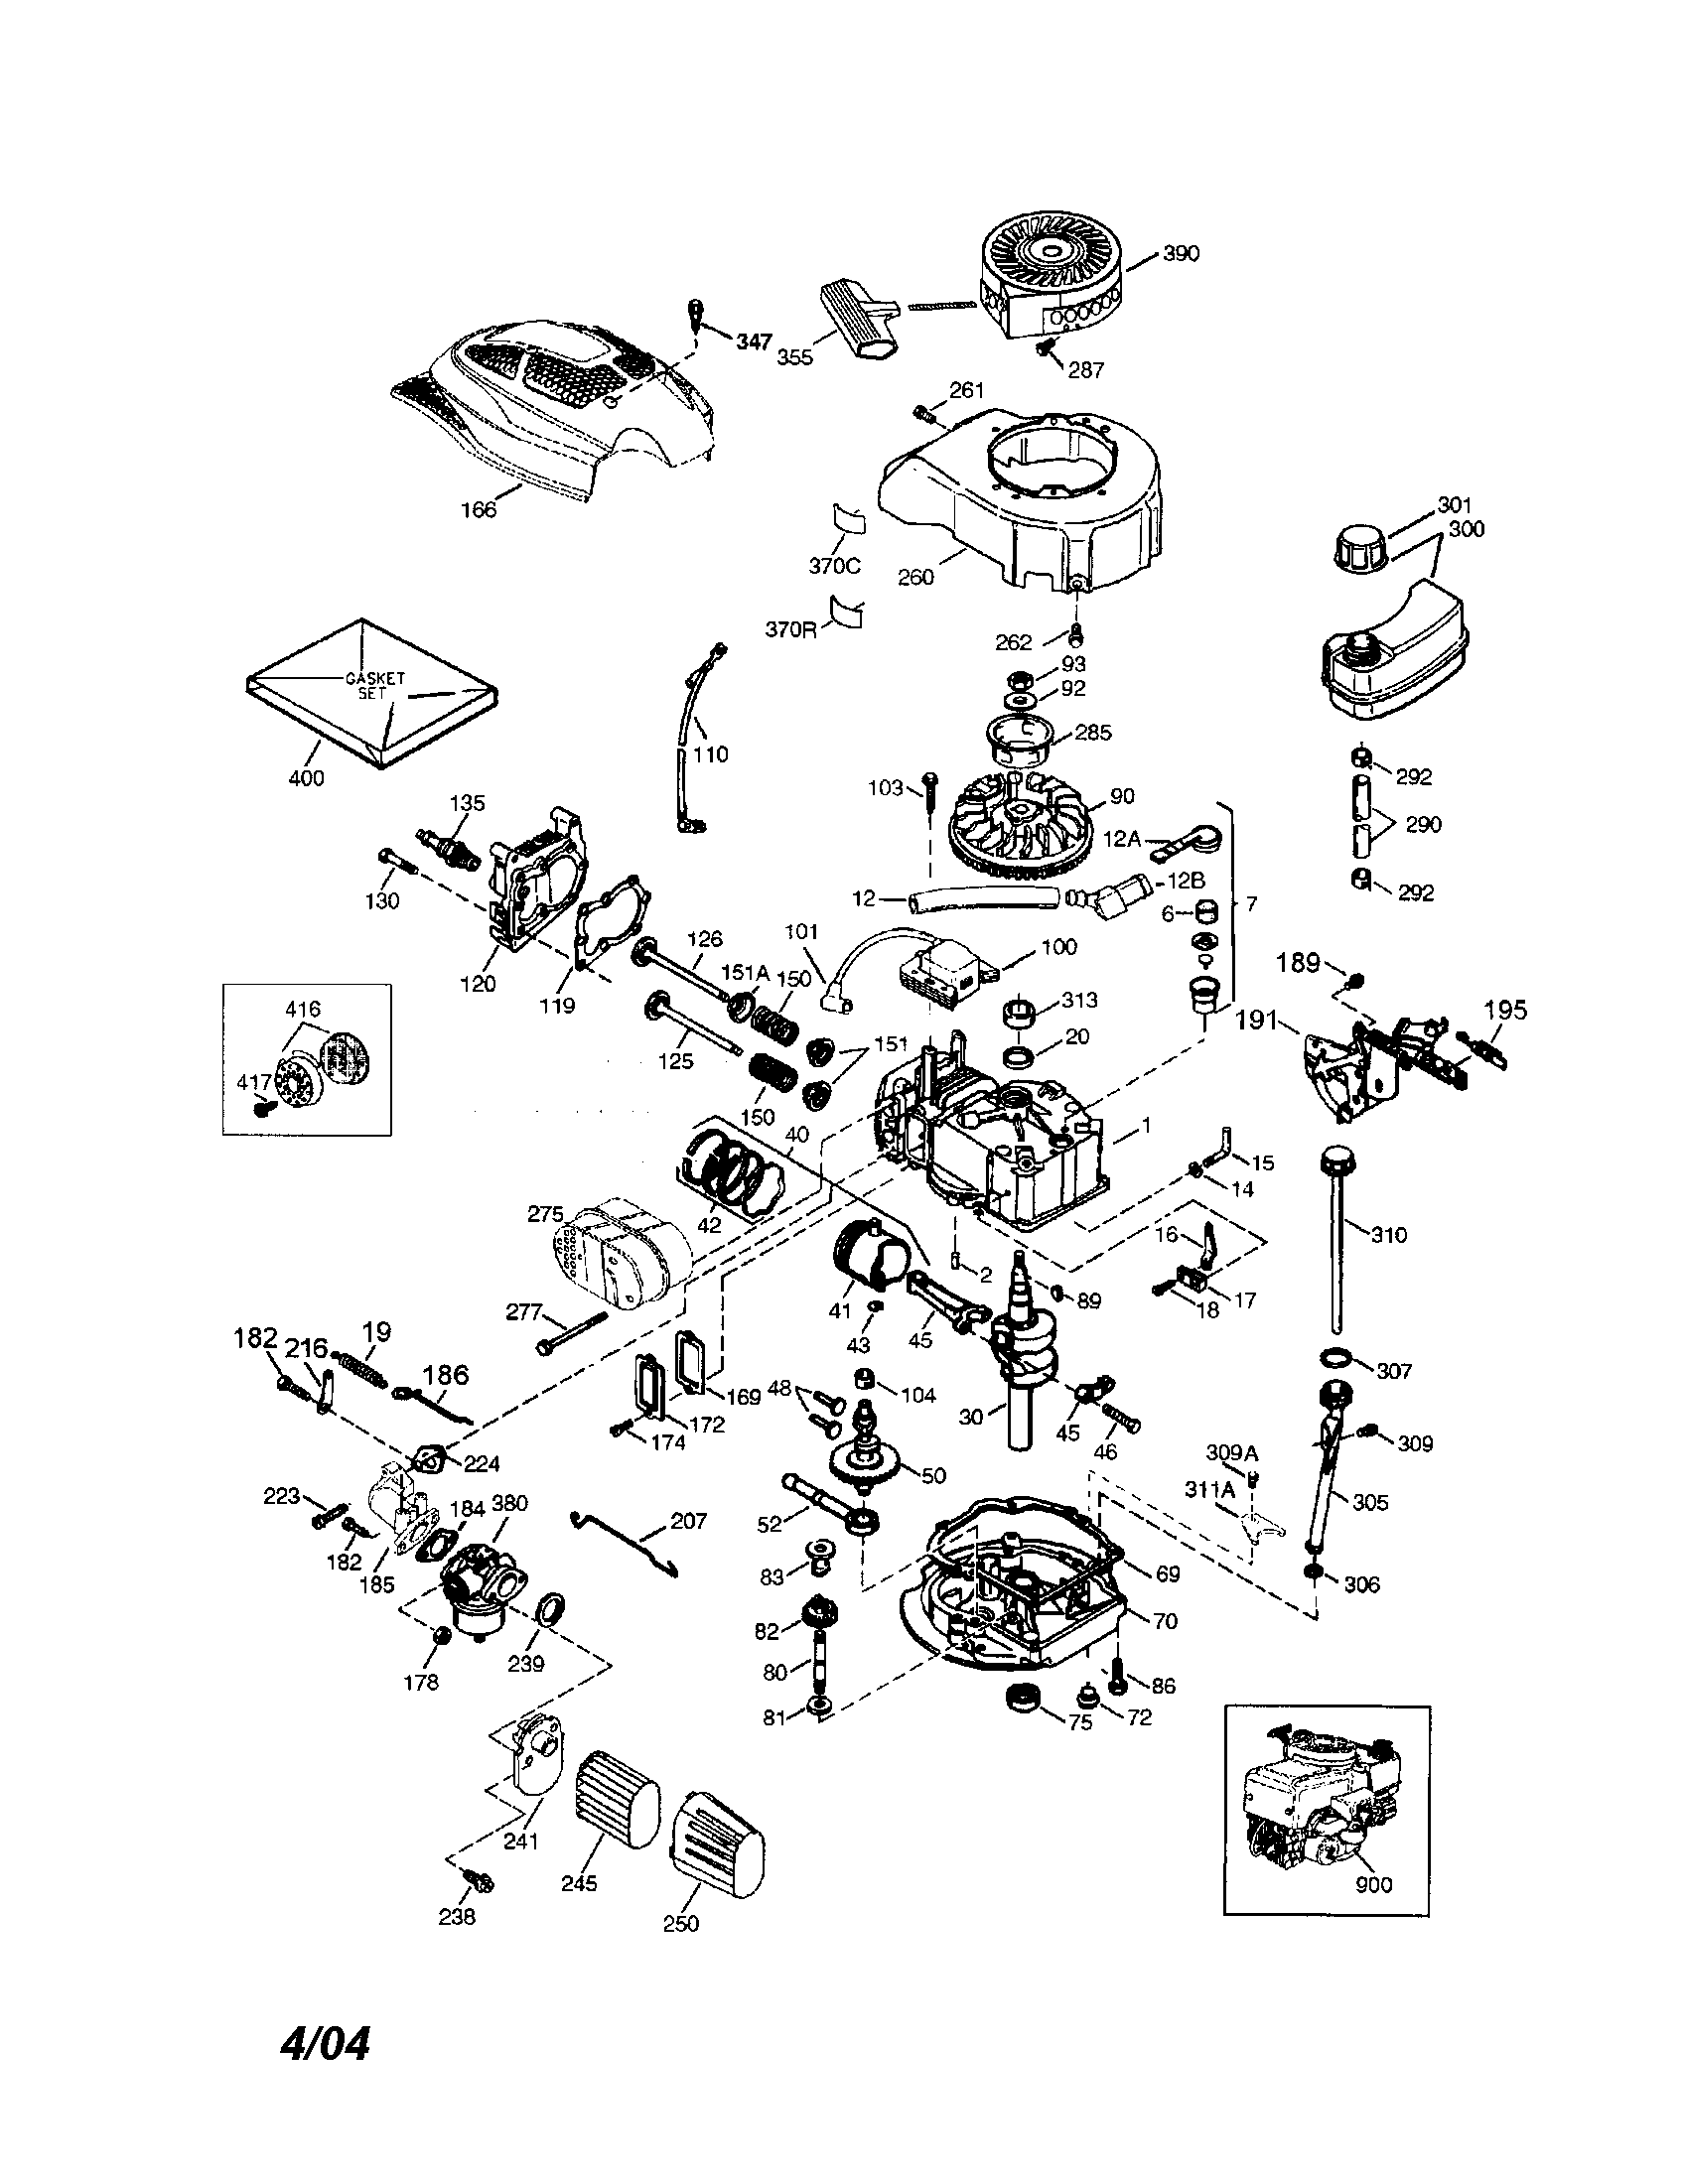 Victa Lawn Mower Parts Diagram